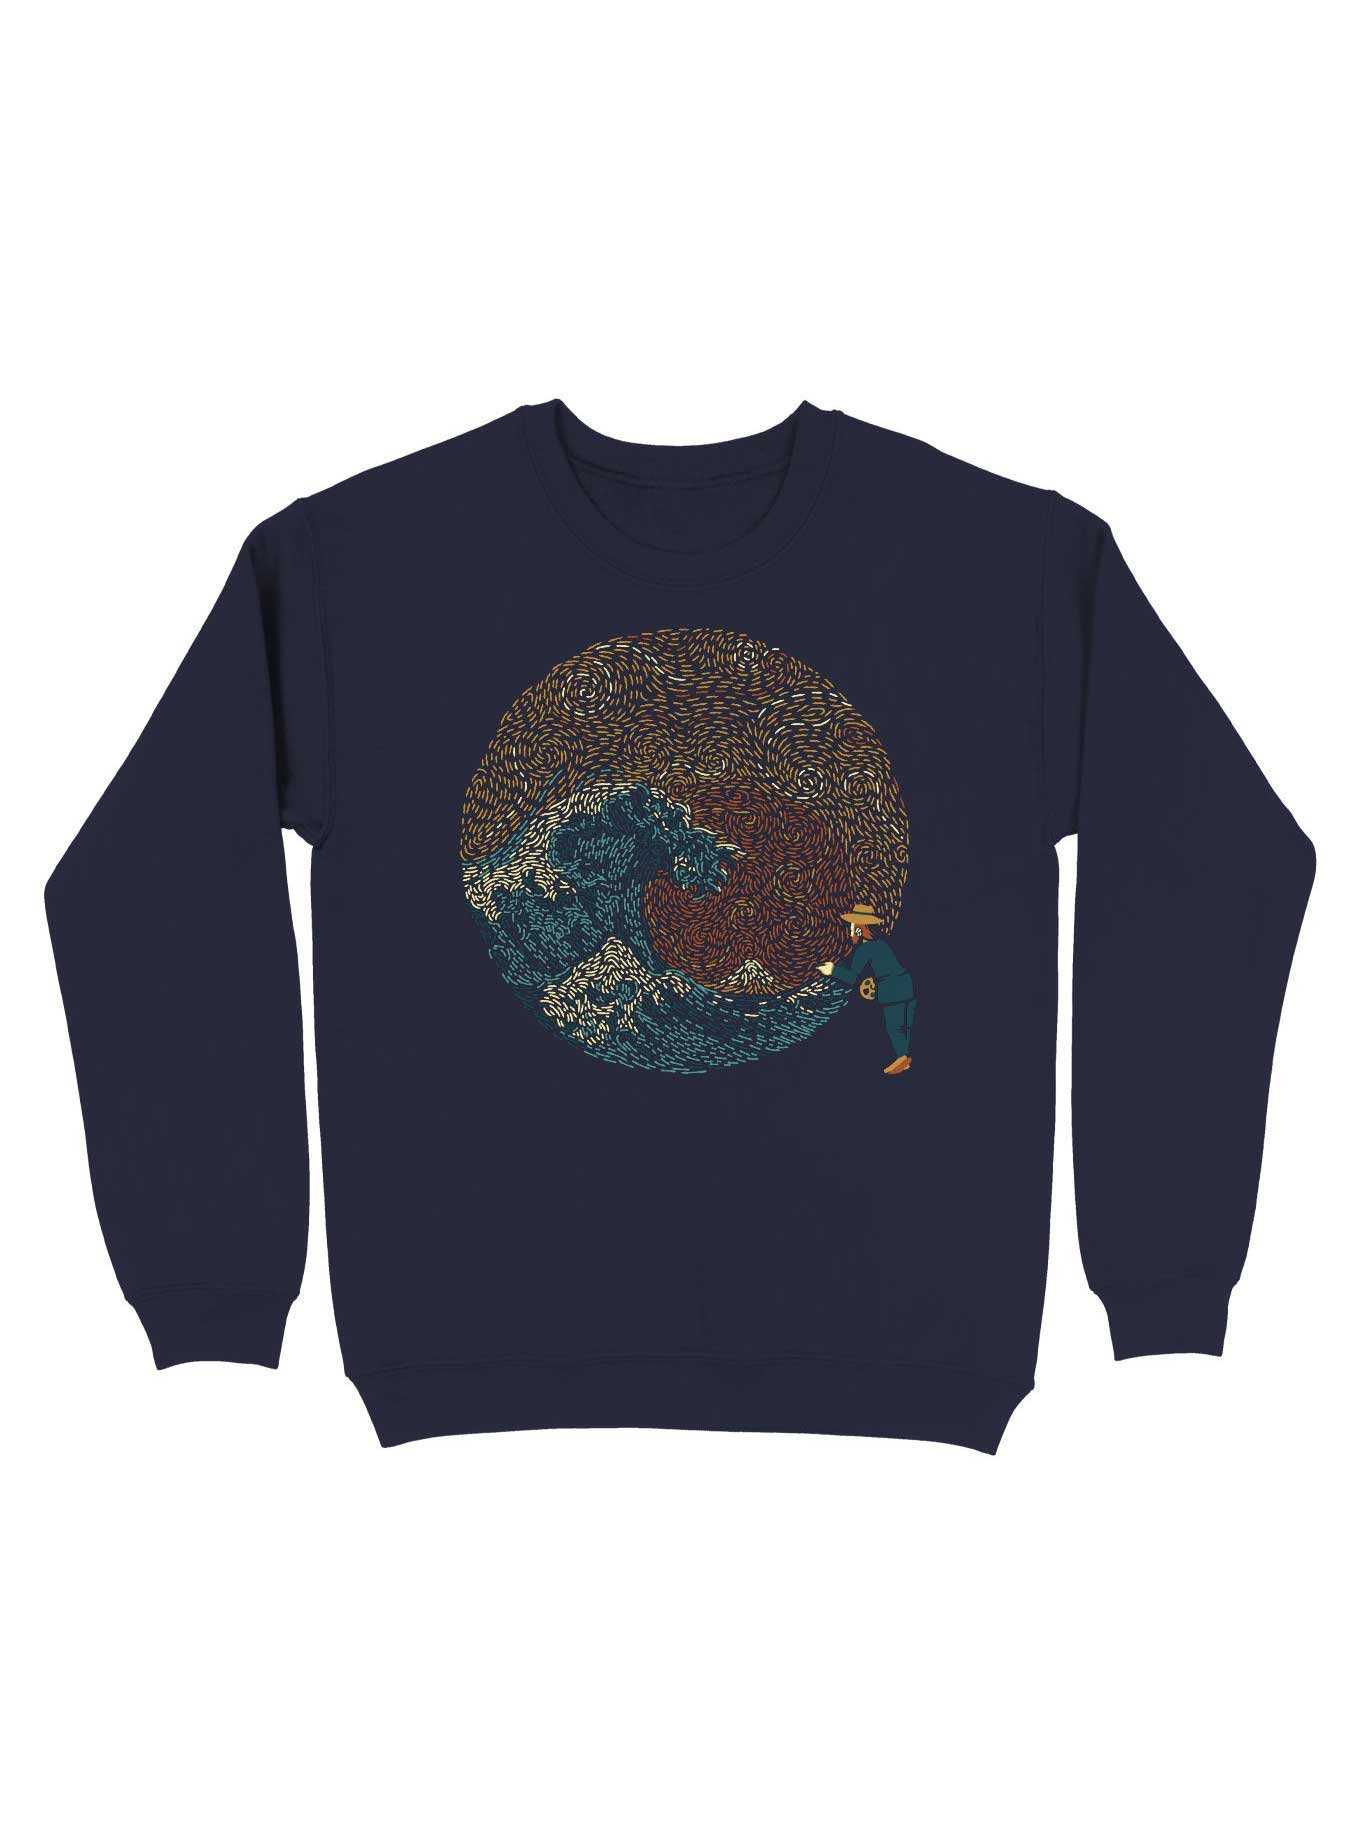 Kanagawa Wave Starry Night Sweatshirt, , hi-res